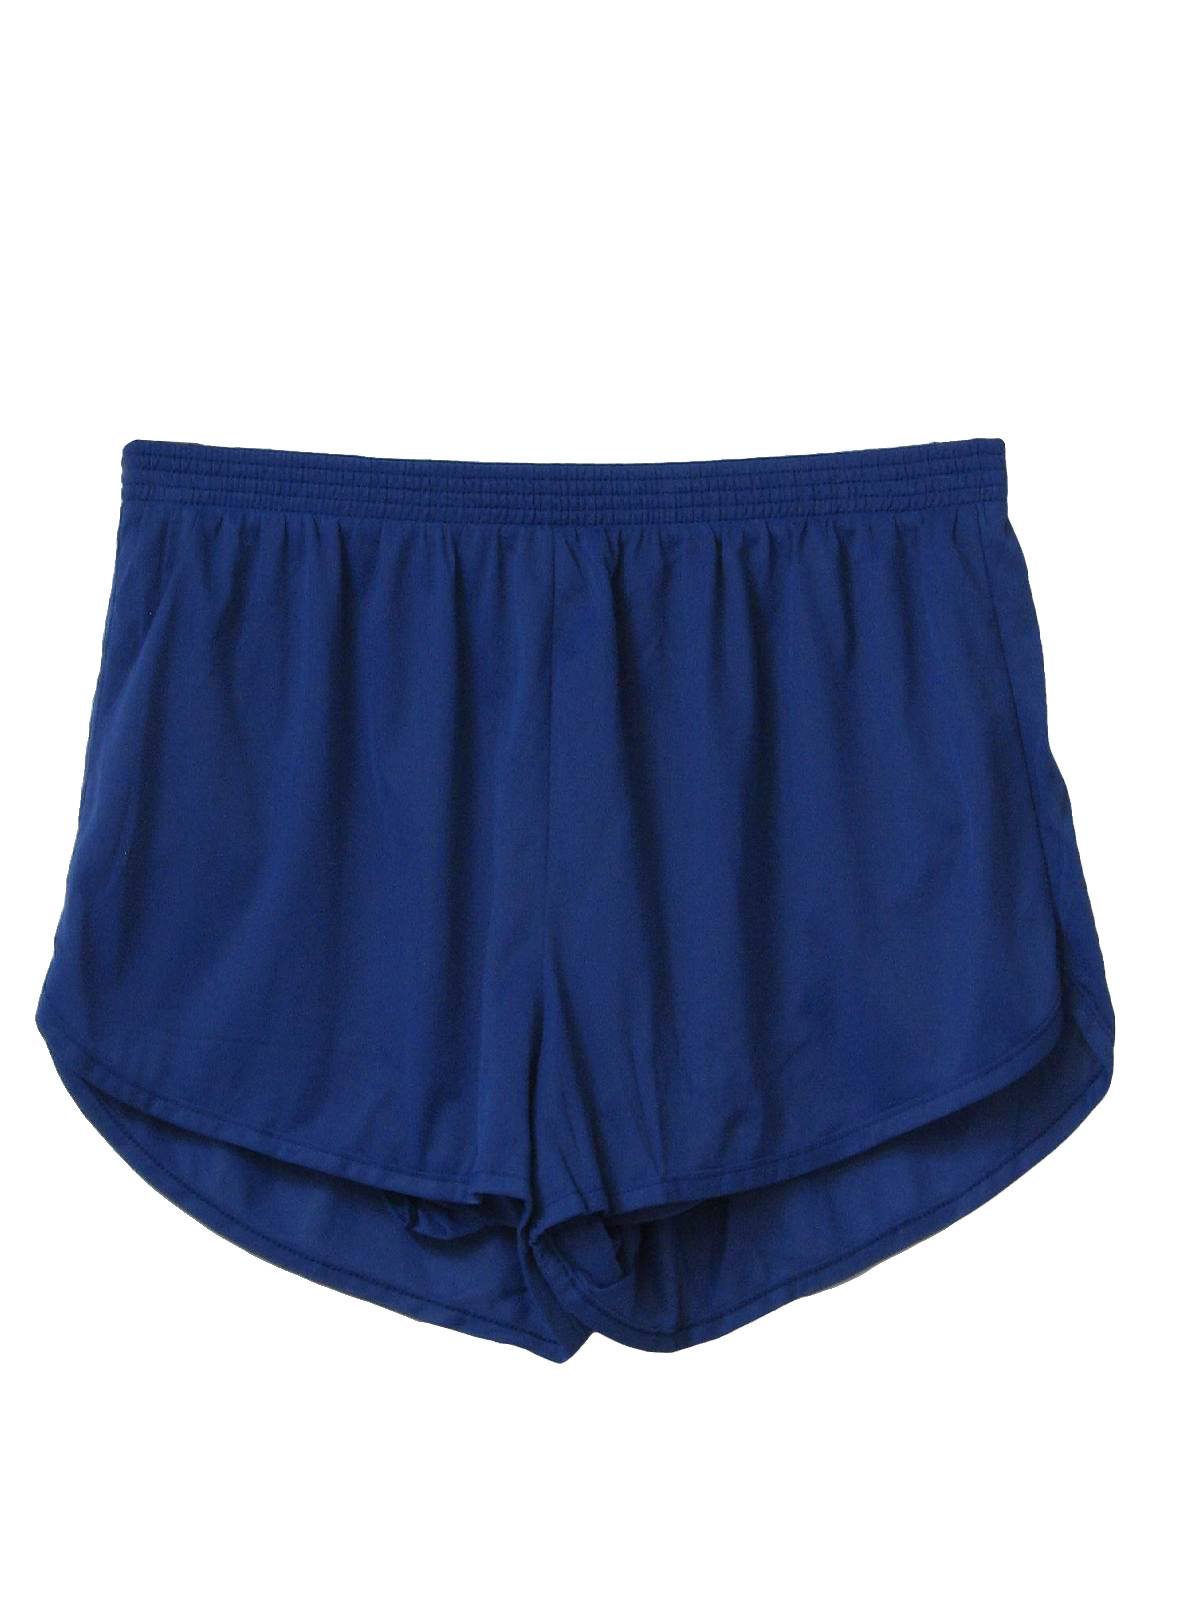 90's Soffe Shorts: 90s -Soffe- Mens blue nylon, brief lined, elastic ...